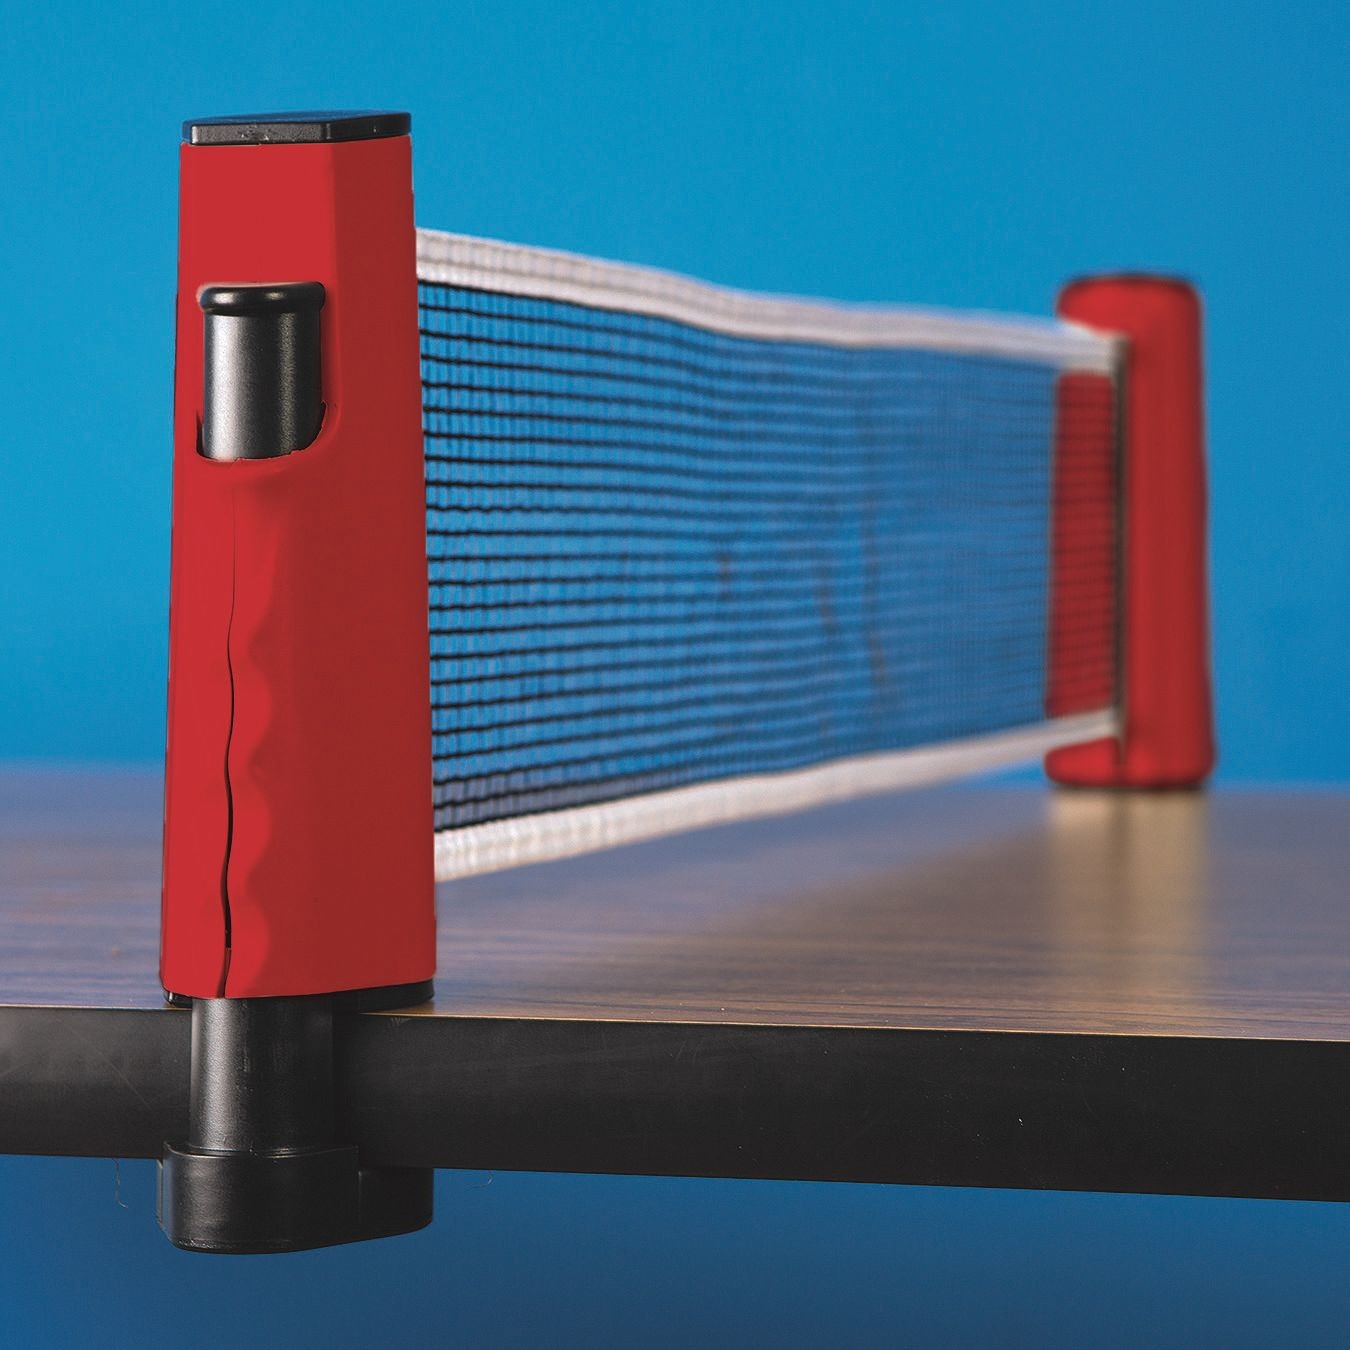 Retractable Table Tennis Net